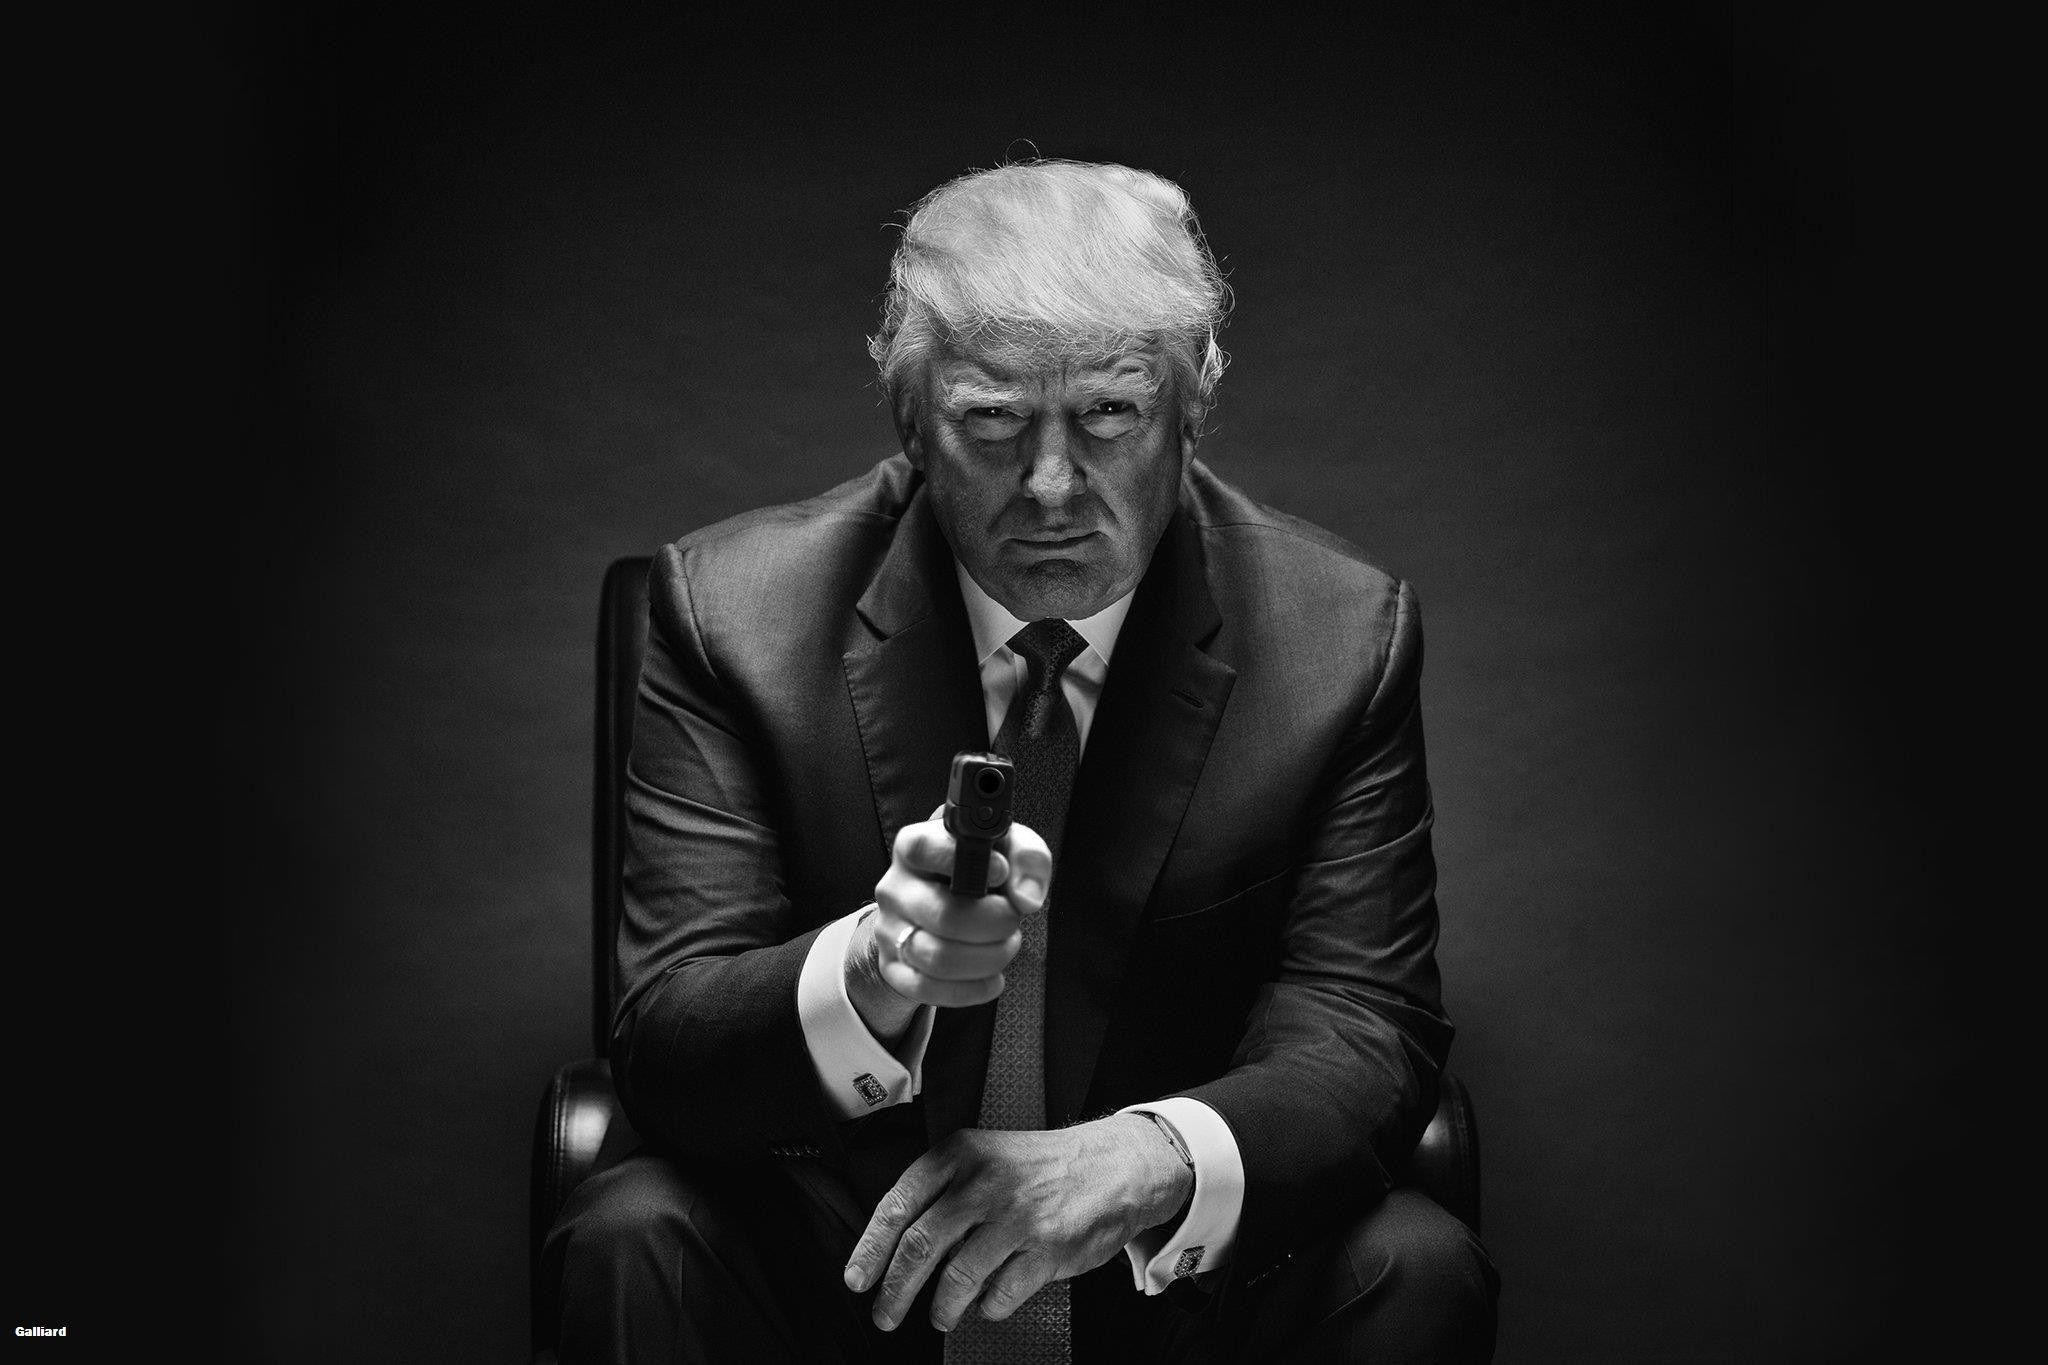 2048x1365 Let's get a Trump Wallpaper Dump going! : The_Donald